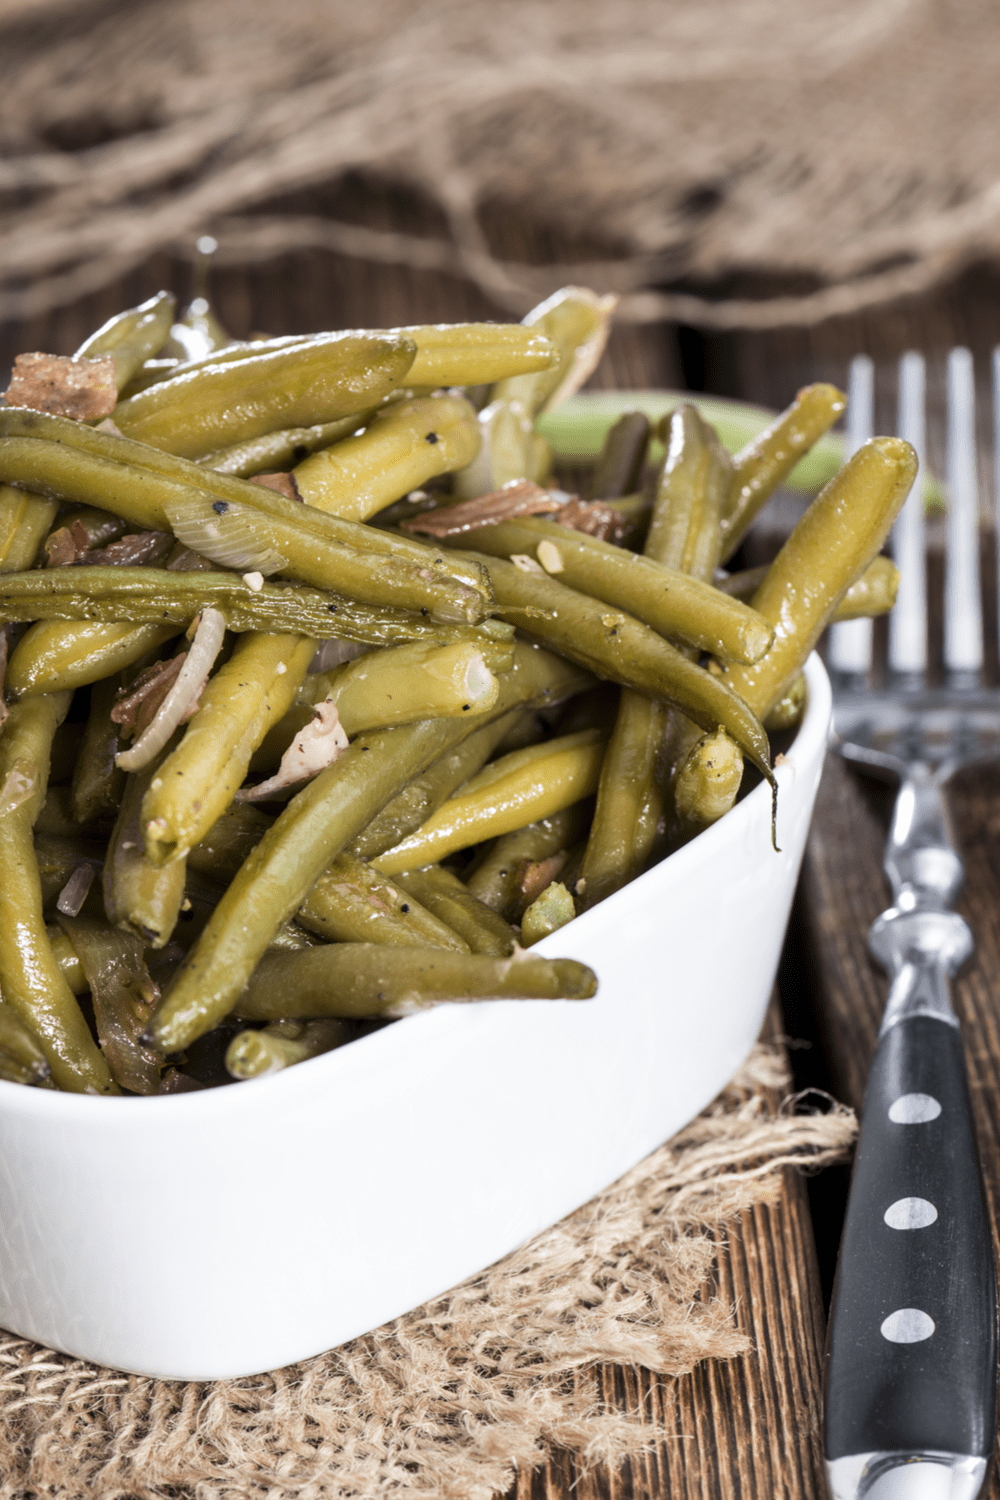 How to Make Canned Green Beans Taste Better